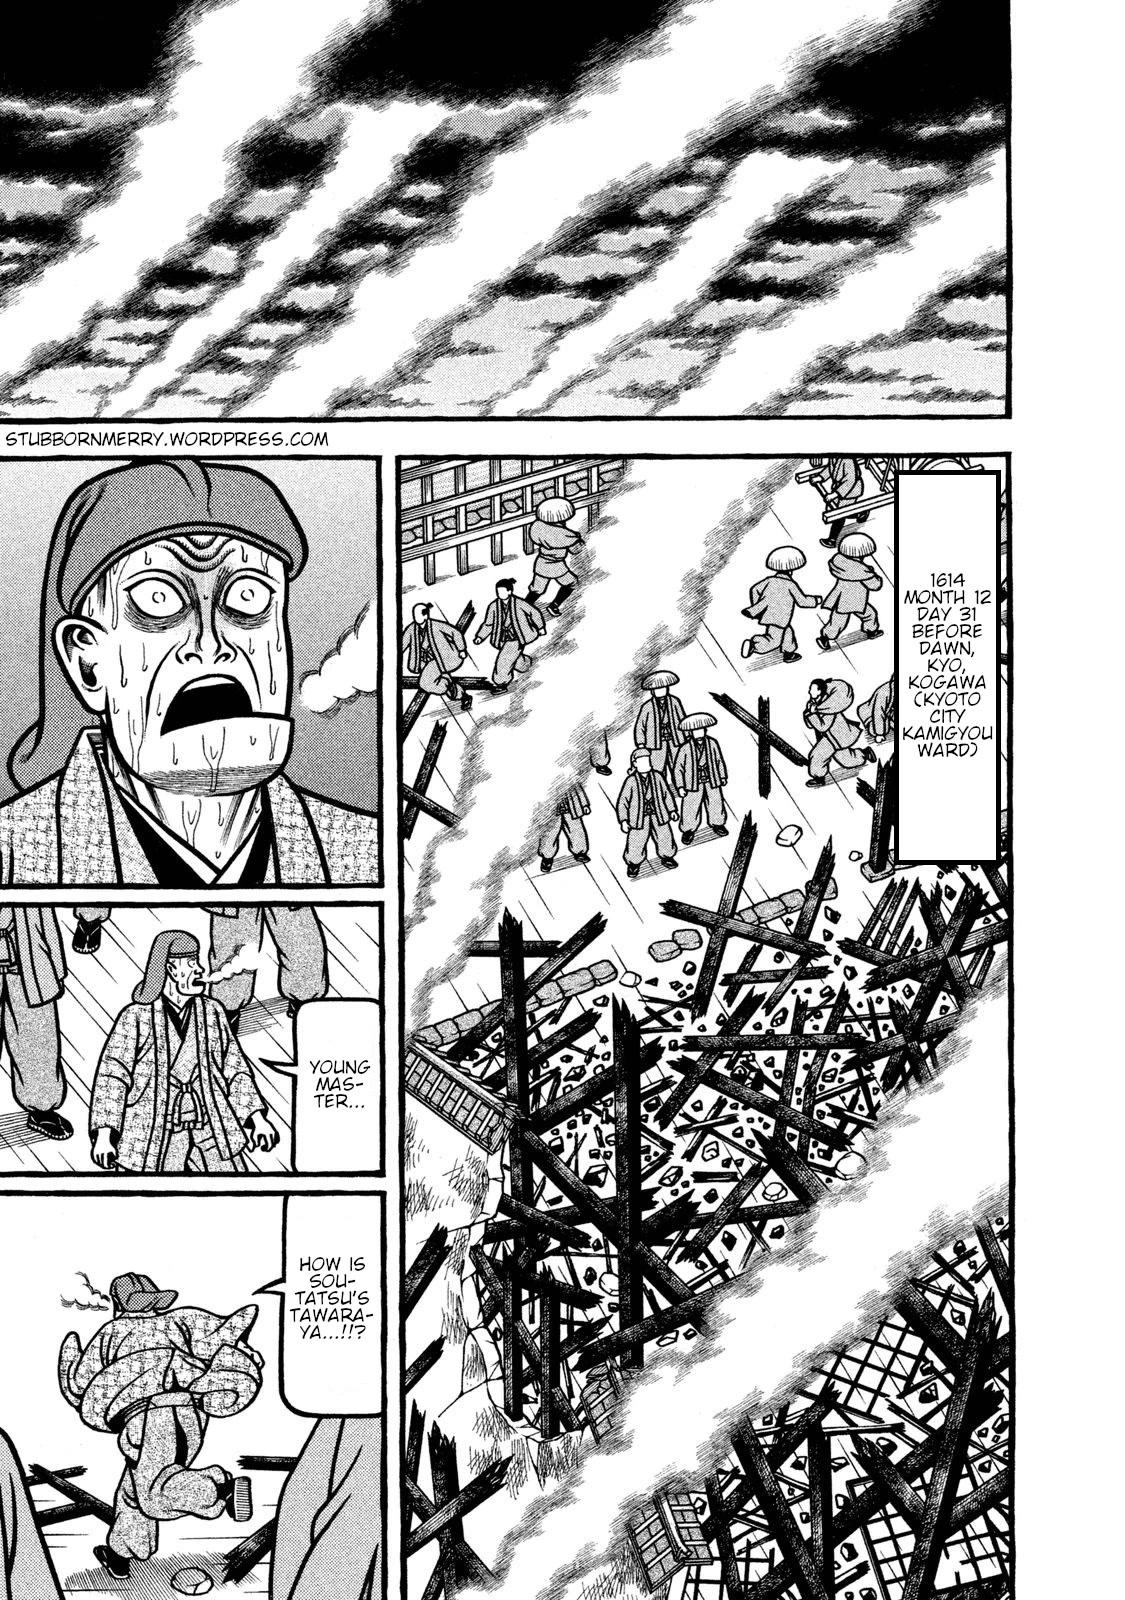 Isekai Ojisan Manga - Chapter 39 - Manga Rock Team - Read Manga